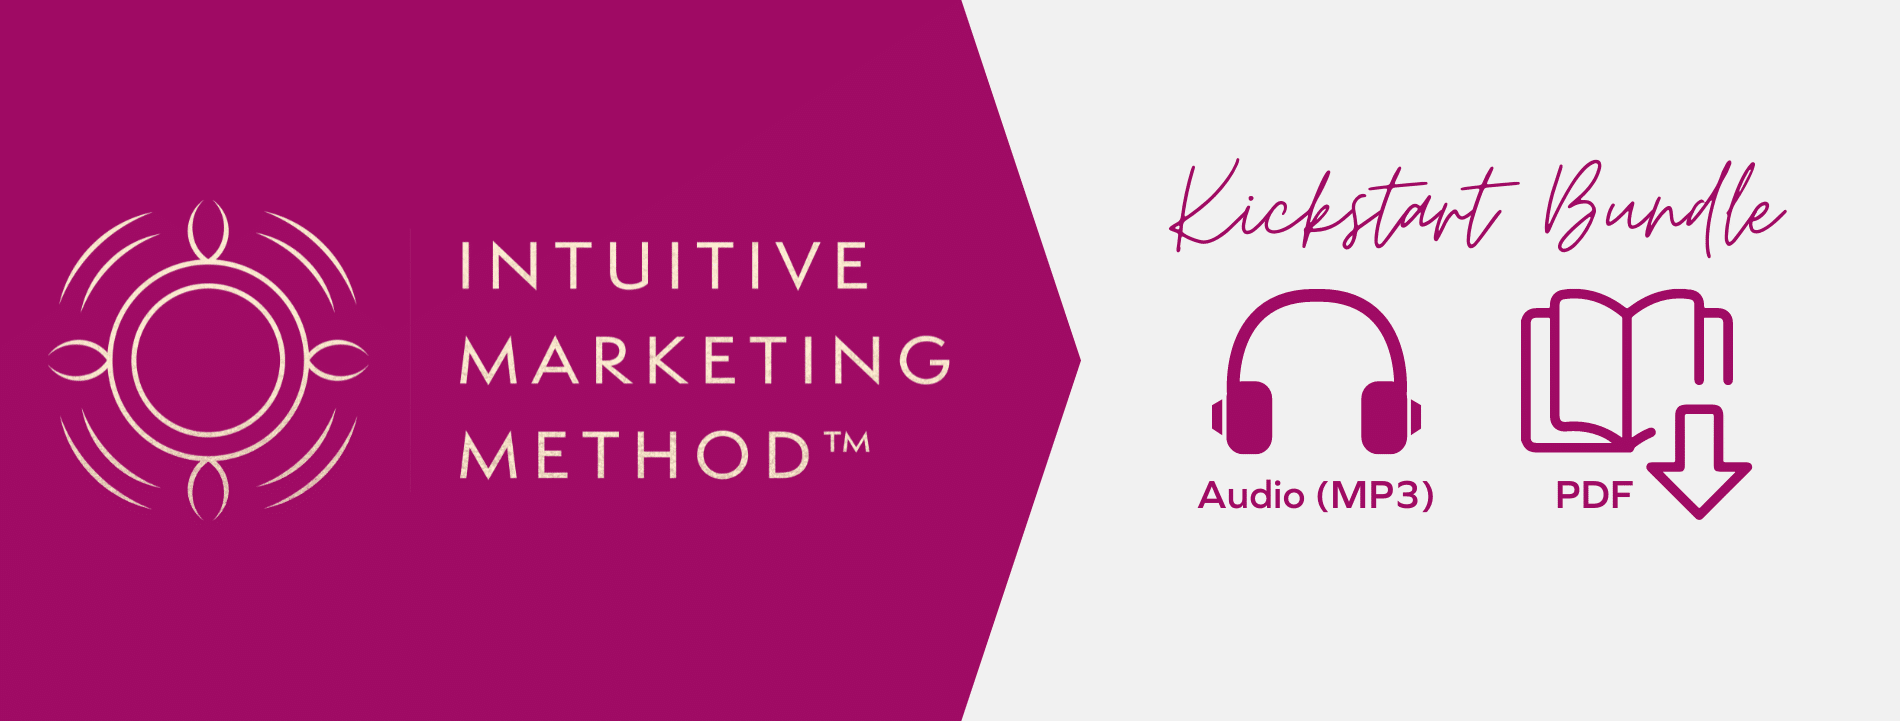 Intuitive Marketing Method kickstart bundle<br>
